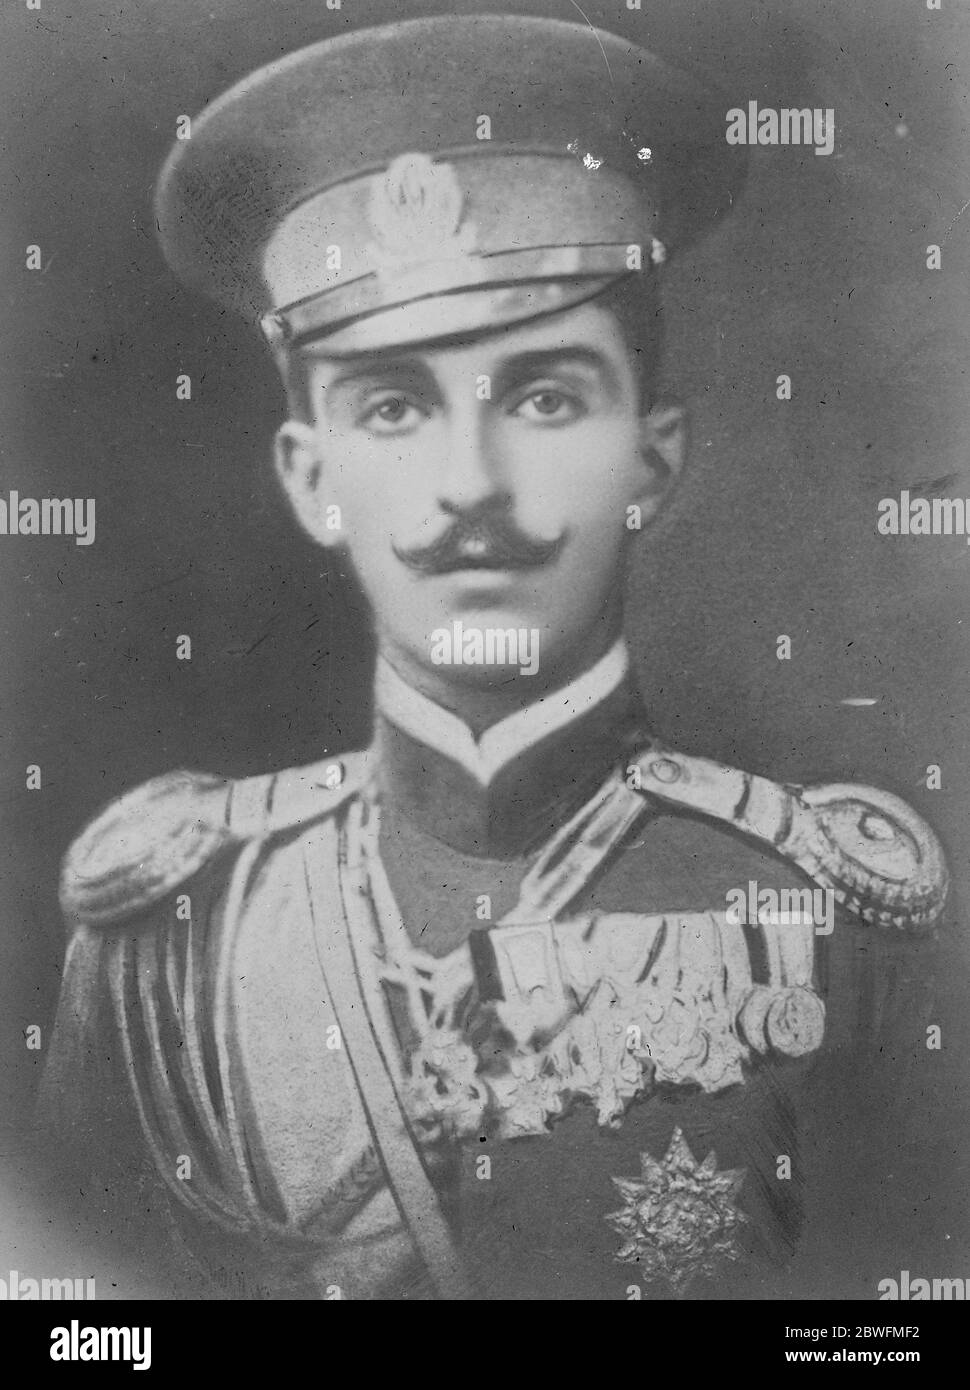 Principe pietro di Montenegro 9 gennaio 1926 Foto Stock